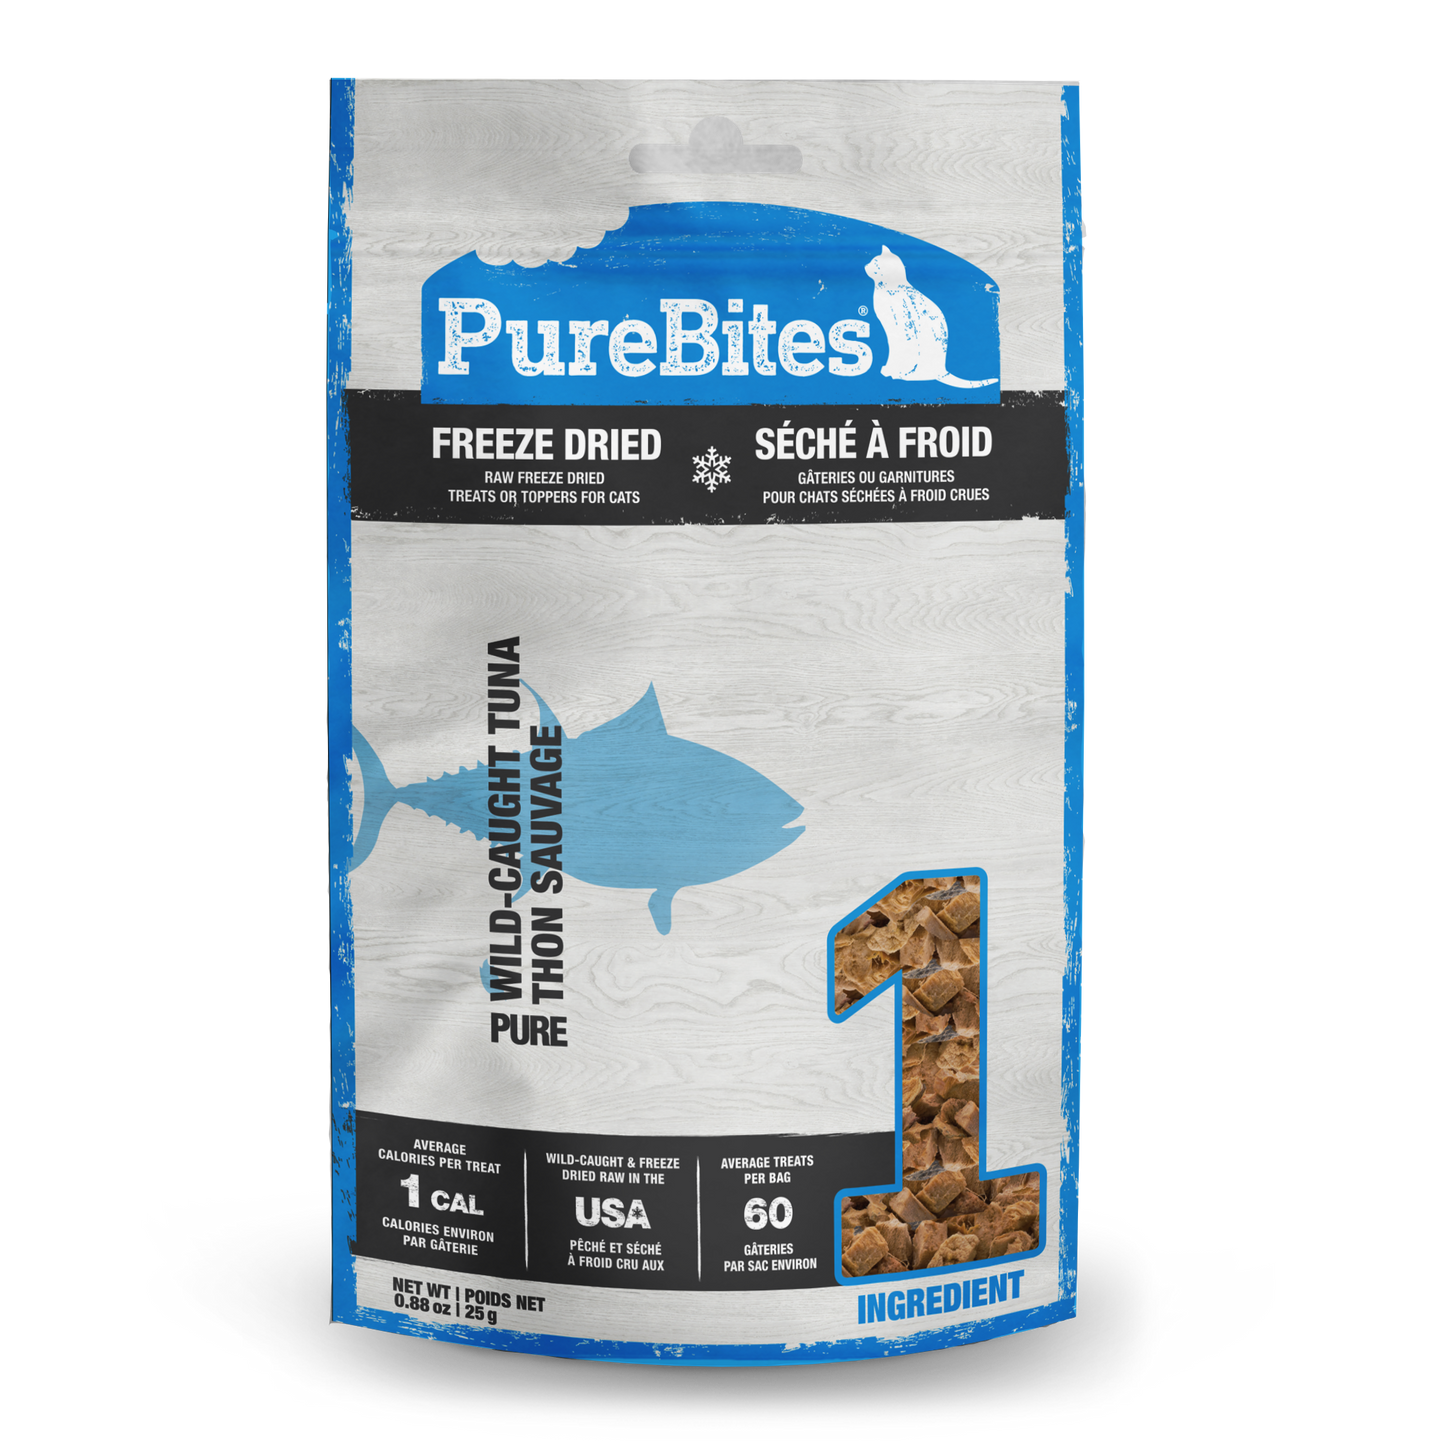 PureBites Freeze-Dried Cat Treats 0.88-oz, Tuna Recipe